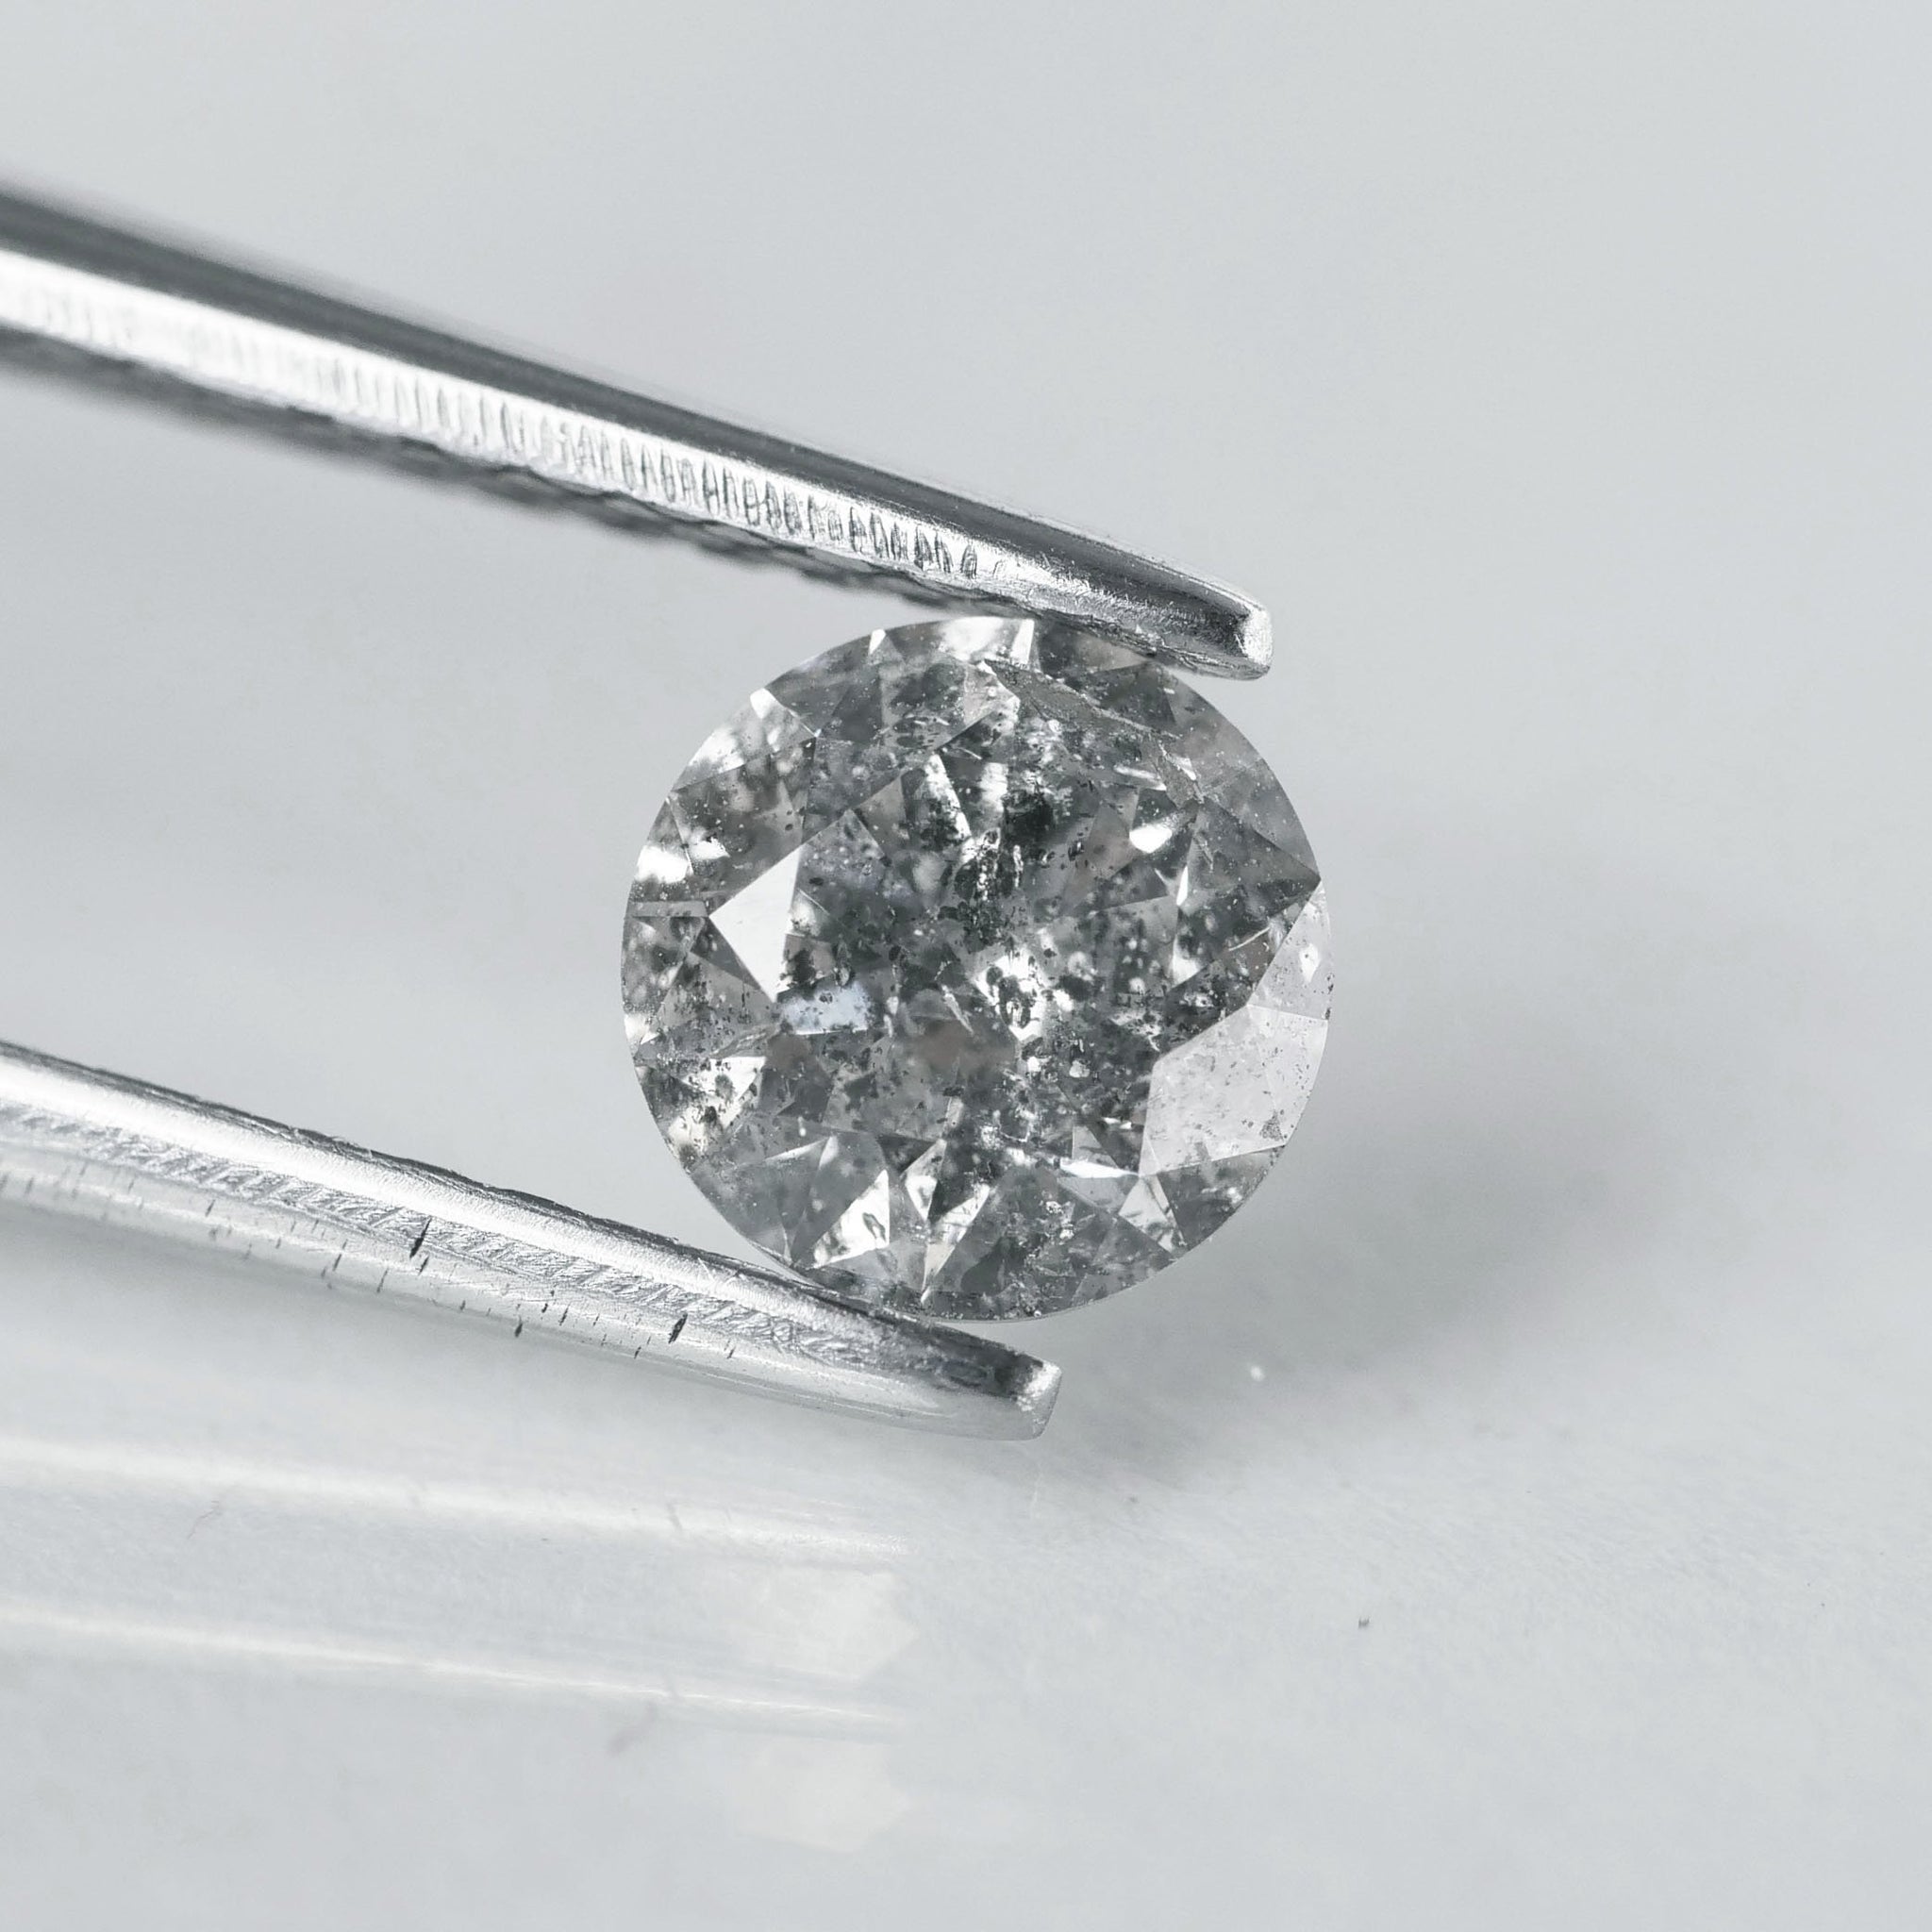 Salt & Pepper diamond | natural, round cut 5mm, 0.5ct - Eden Garden Jewelry™